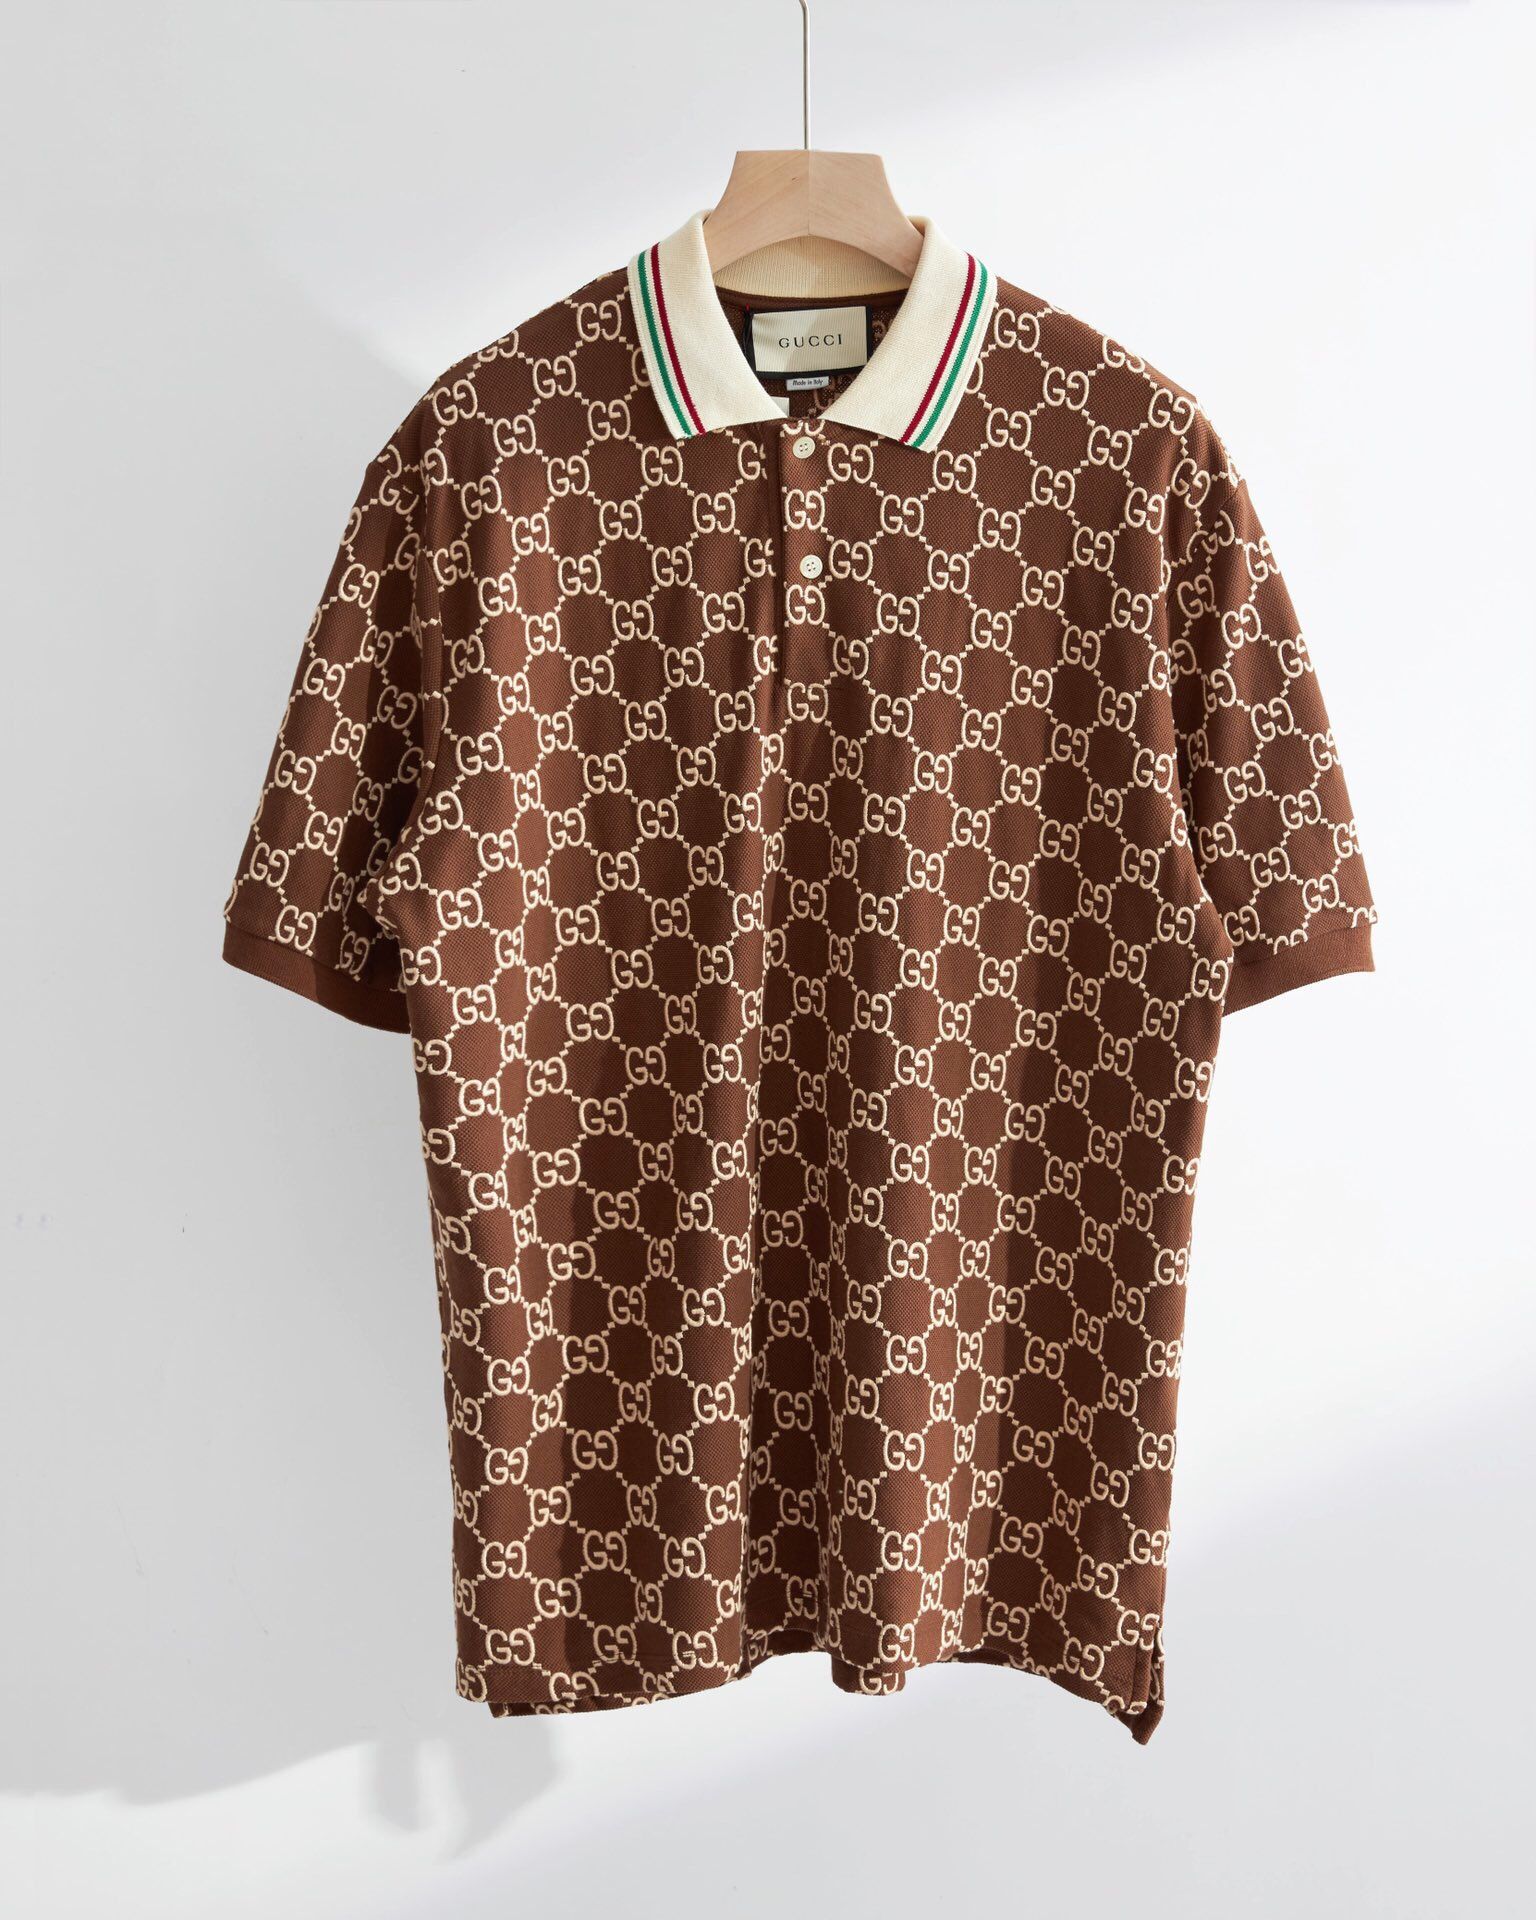 Gucci Men’s Brown Polo Shirt New 